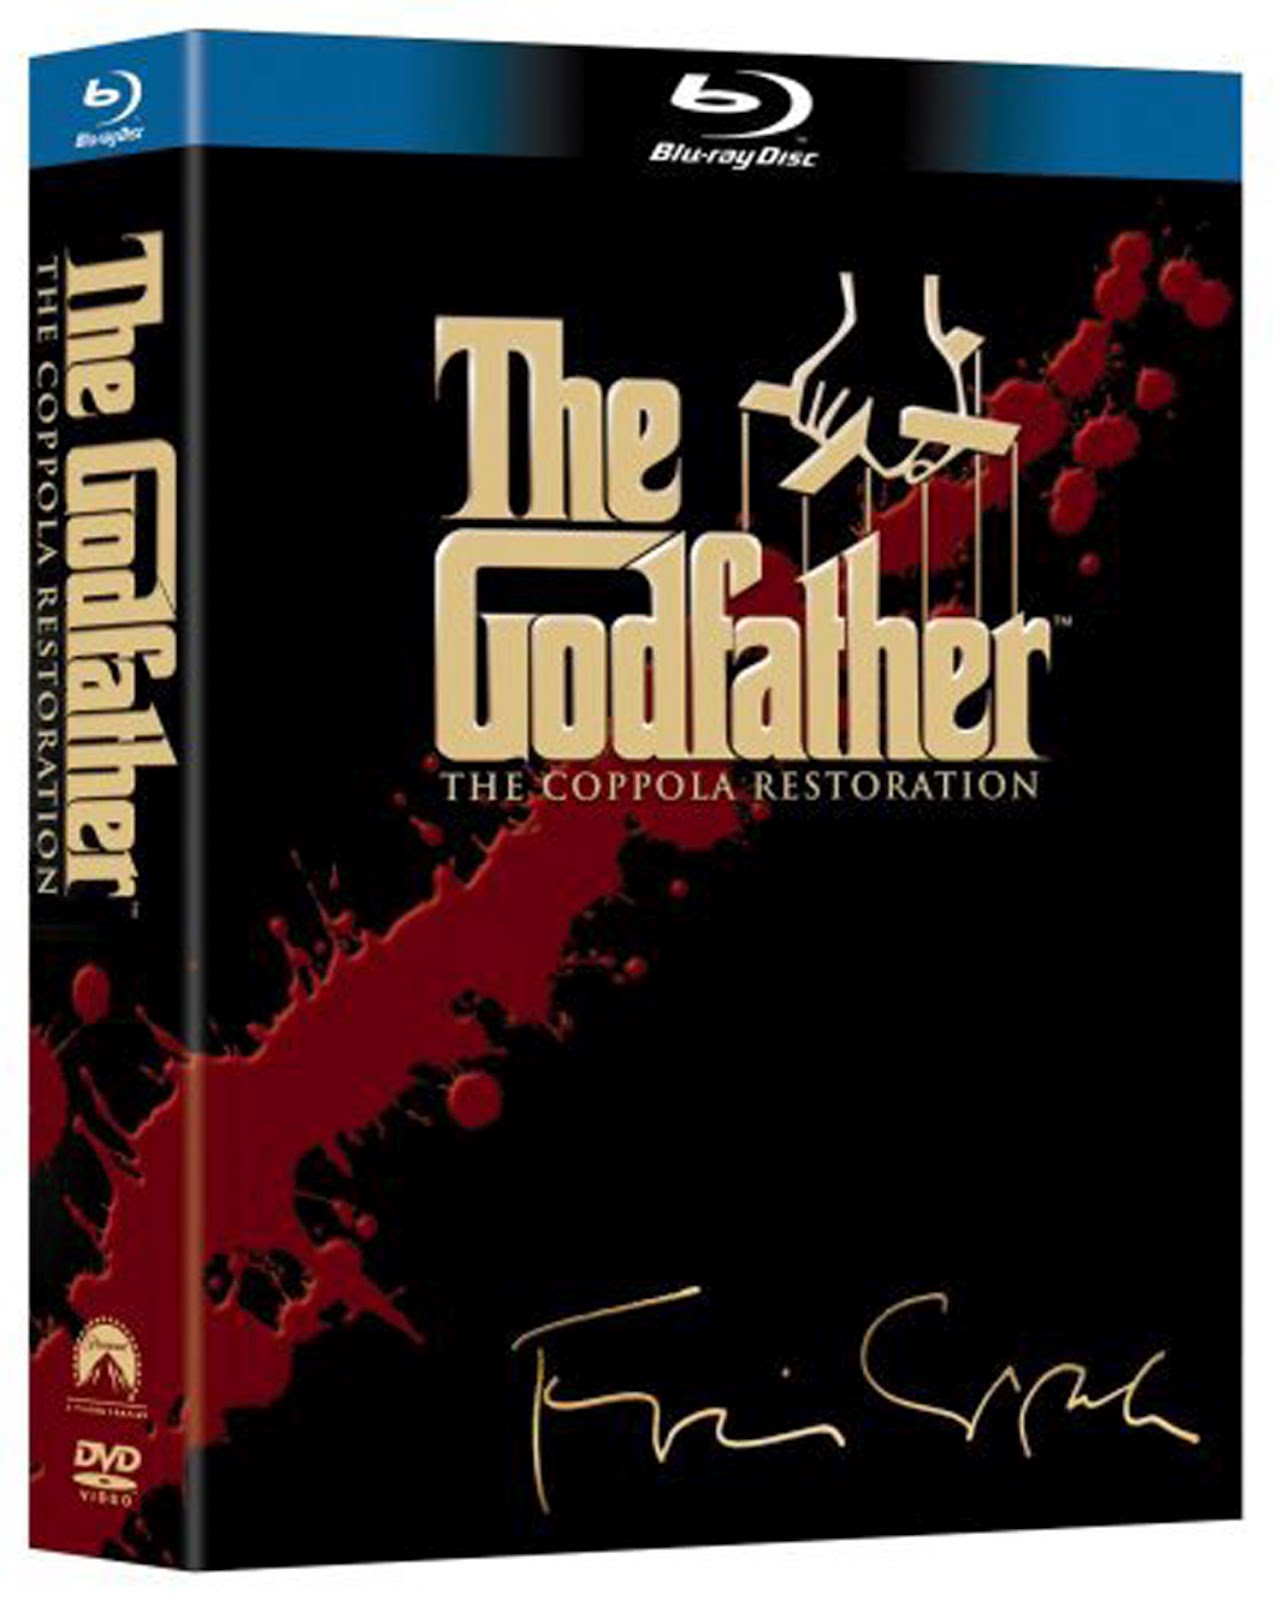 The Godfather1 Blu-ray DVD Case